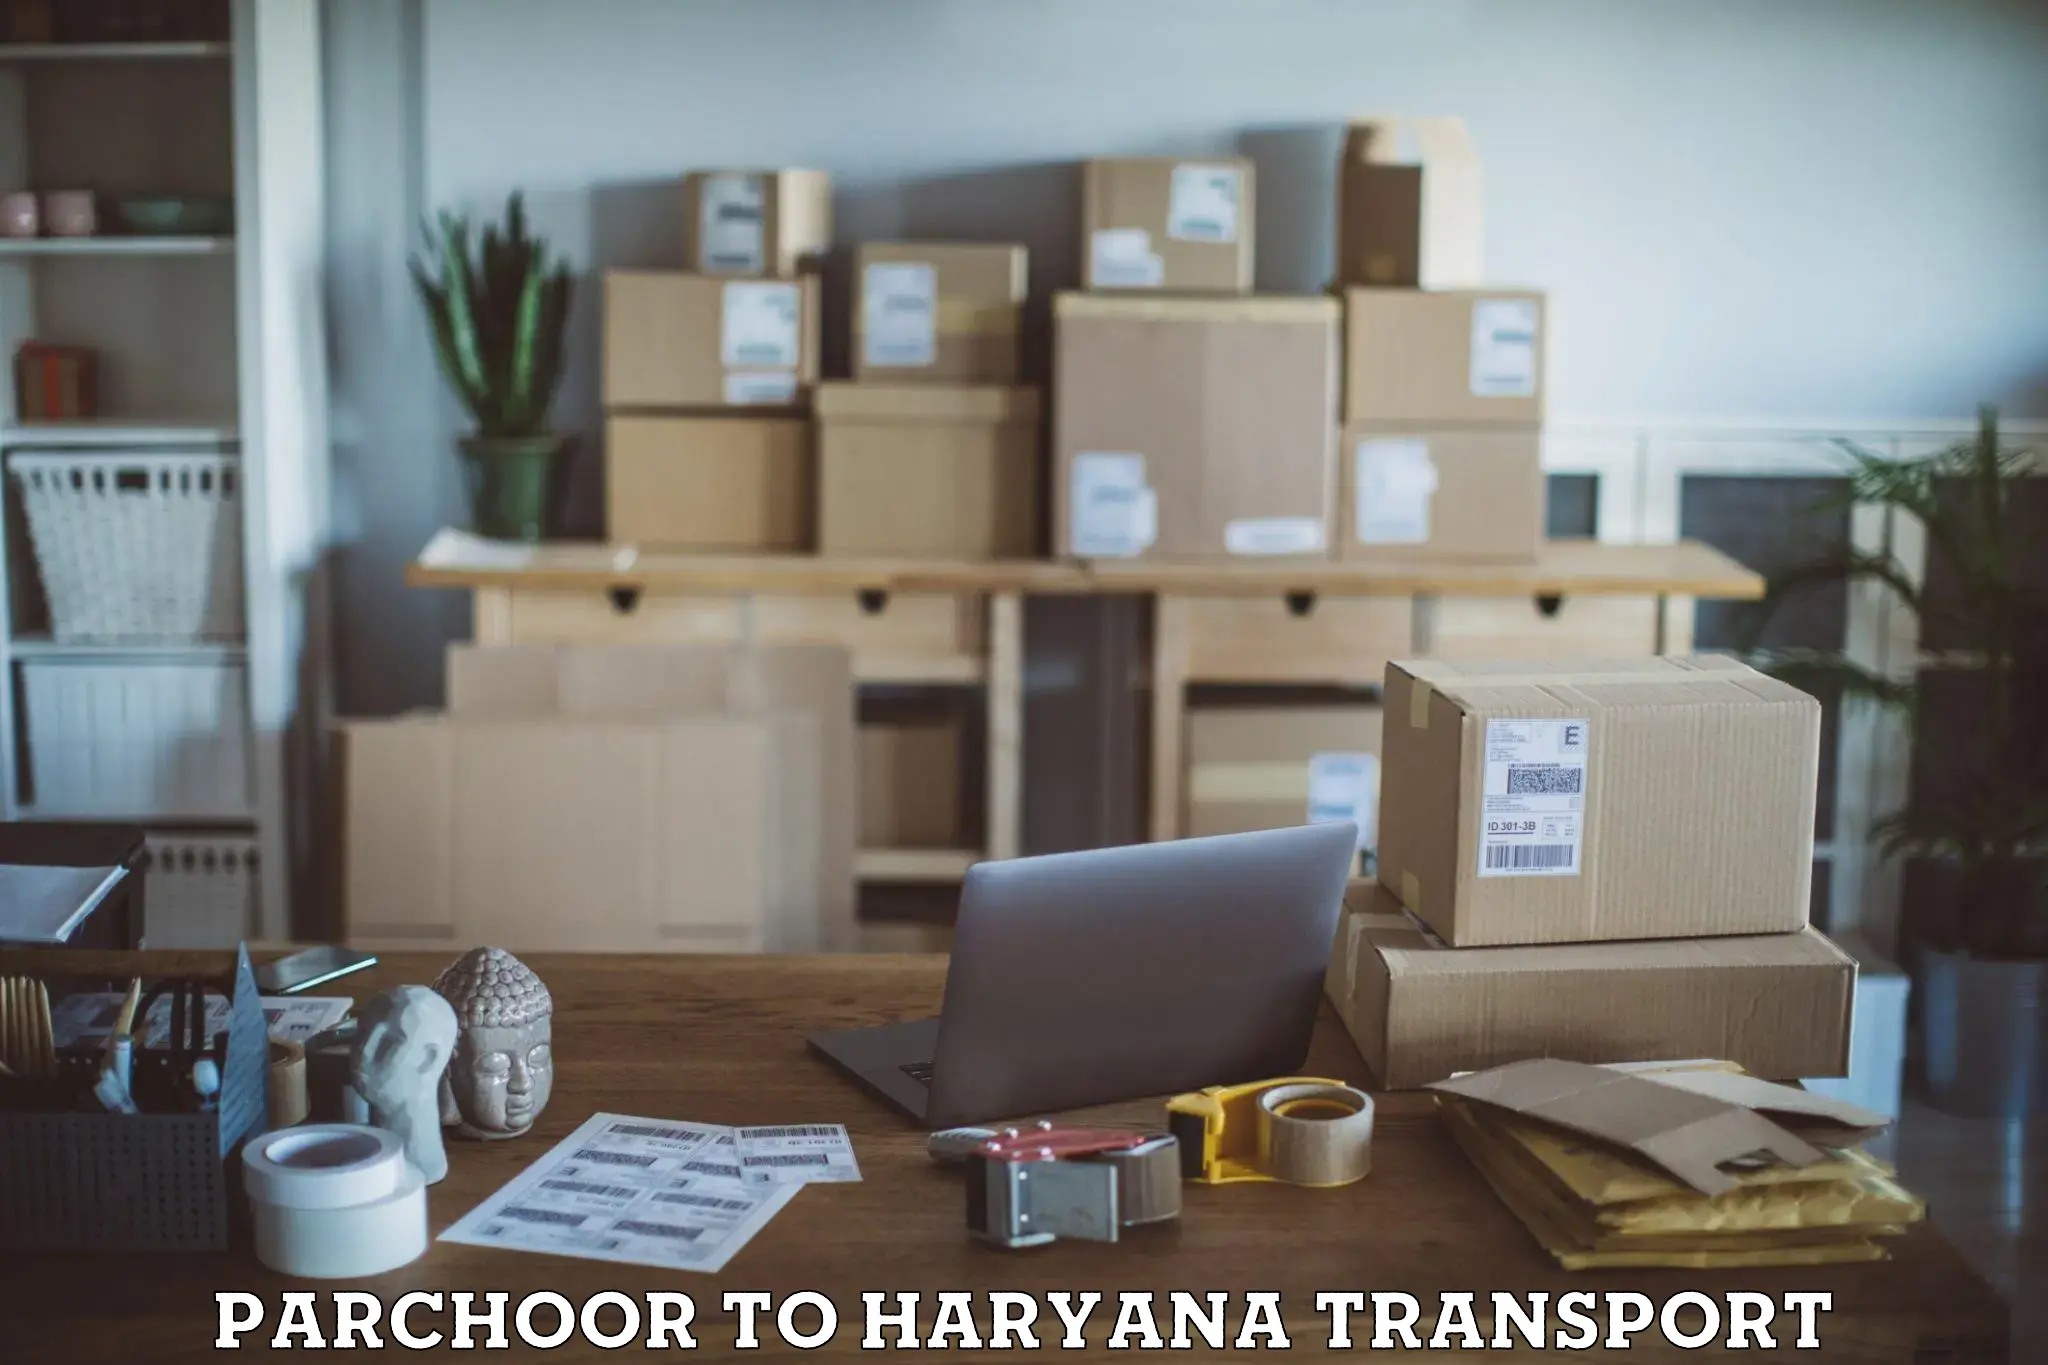 Two wheeler parcel service Parchoor to Haryana